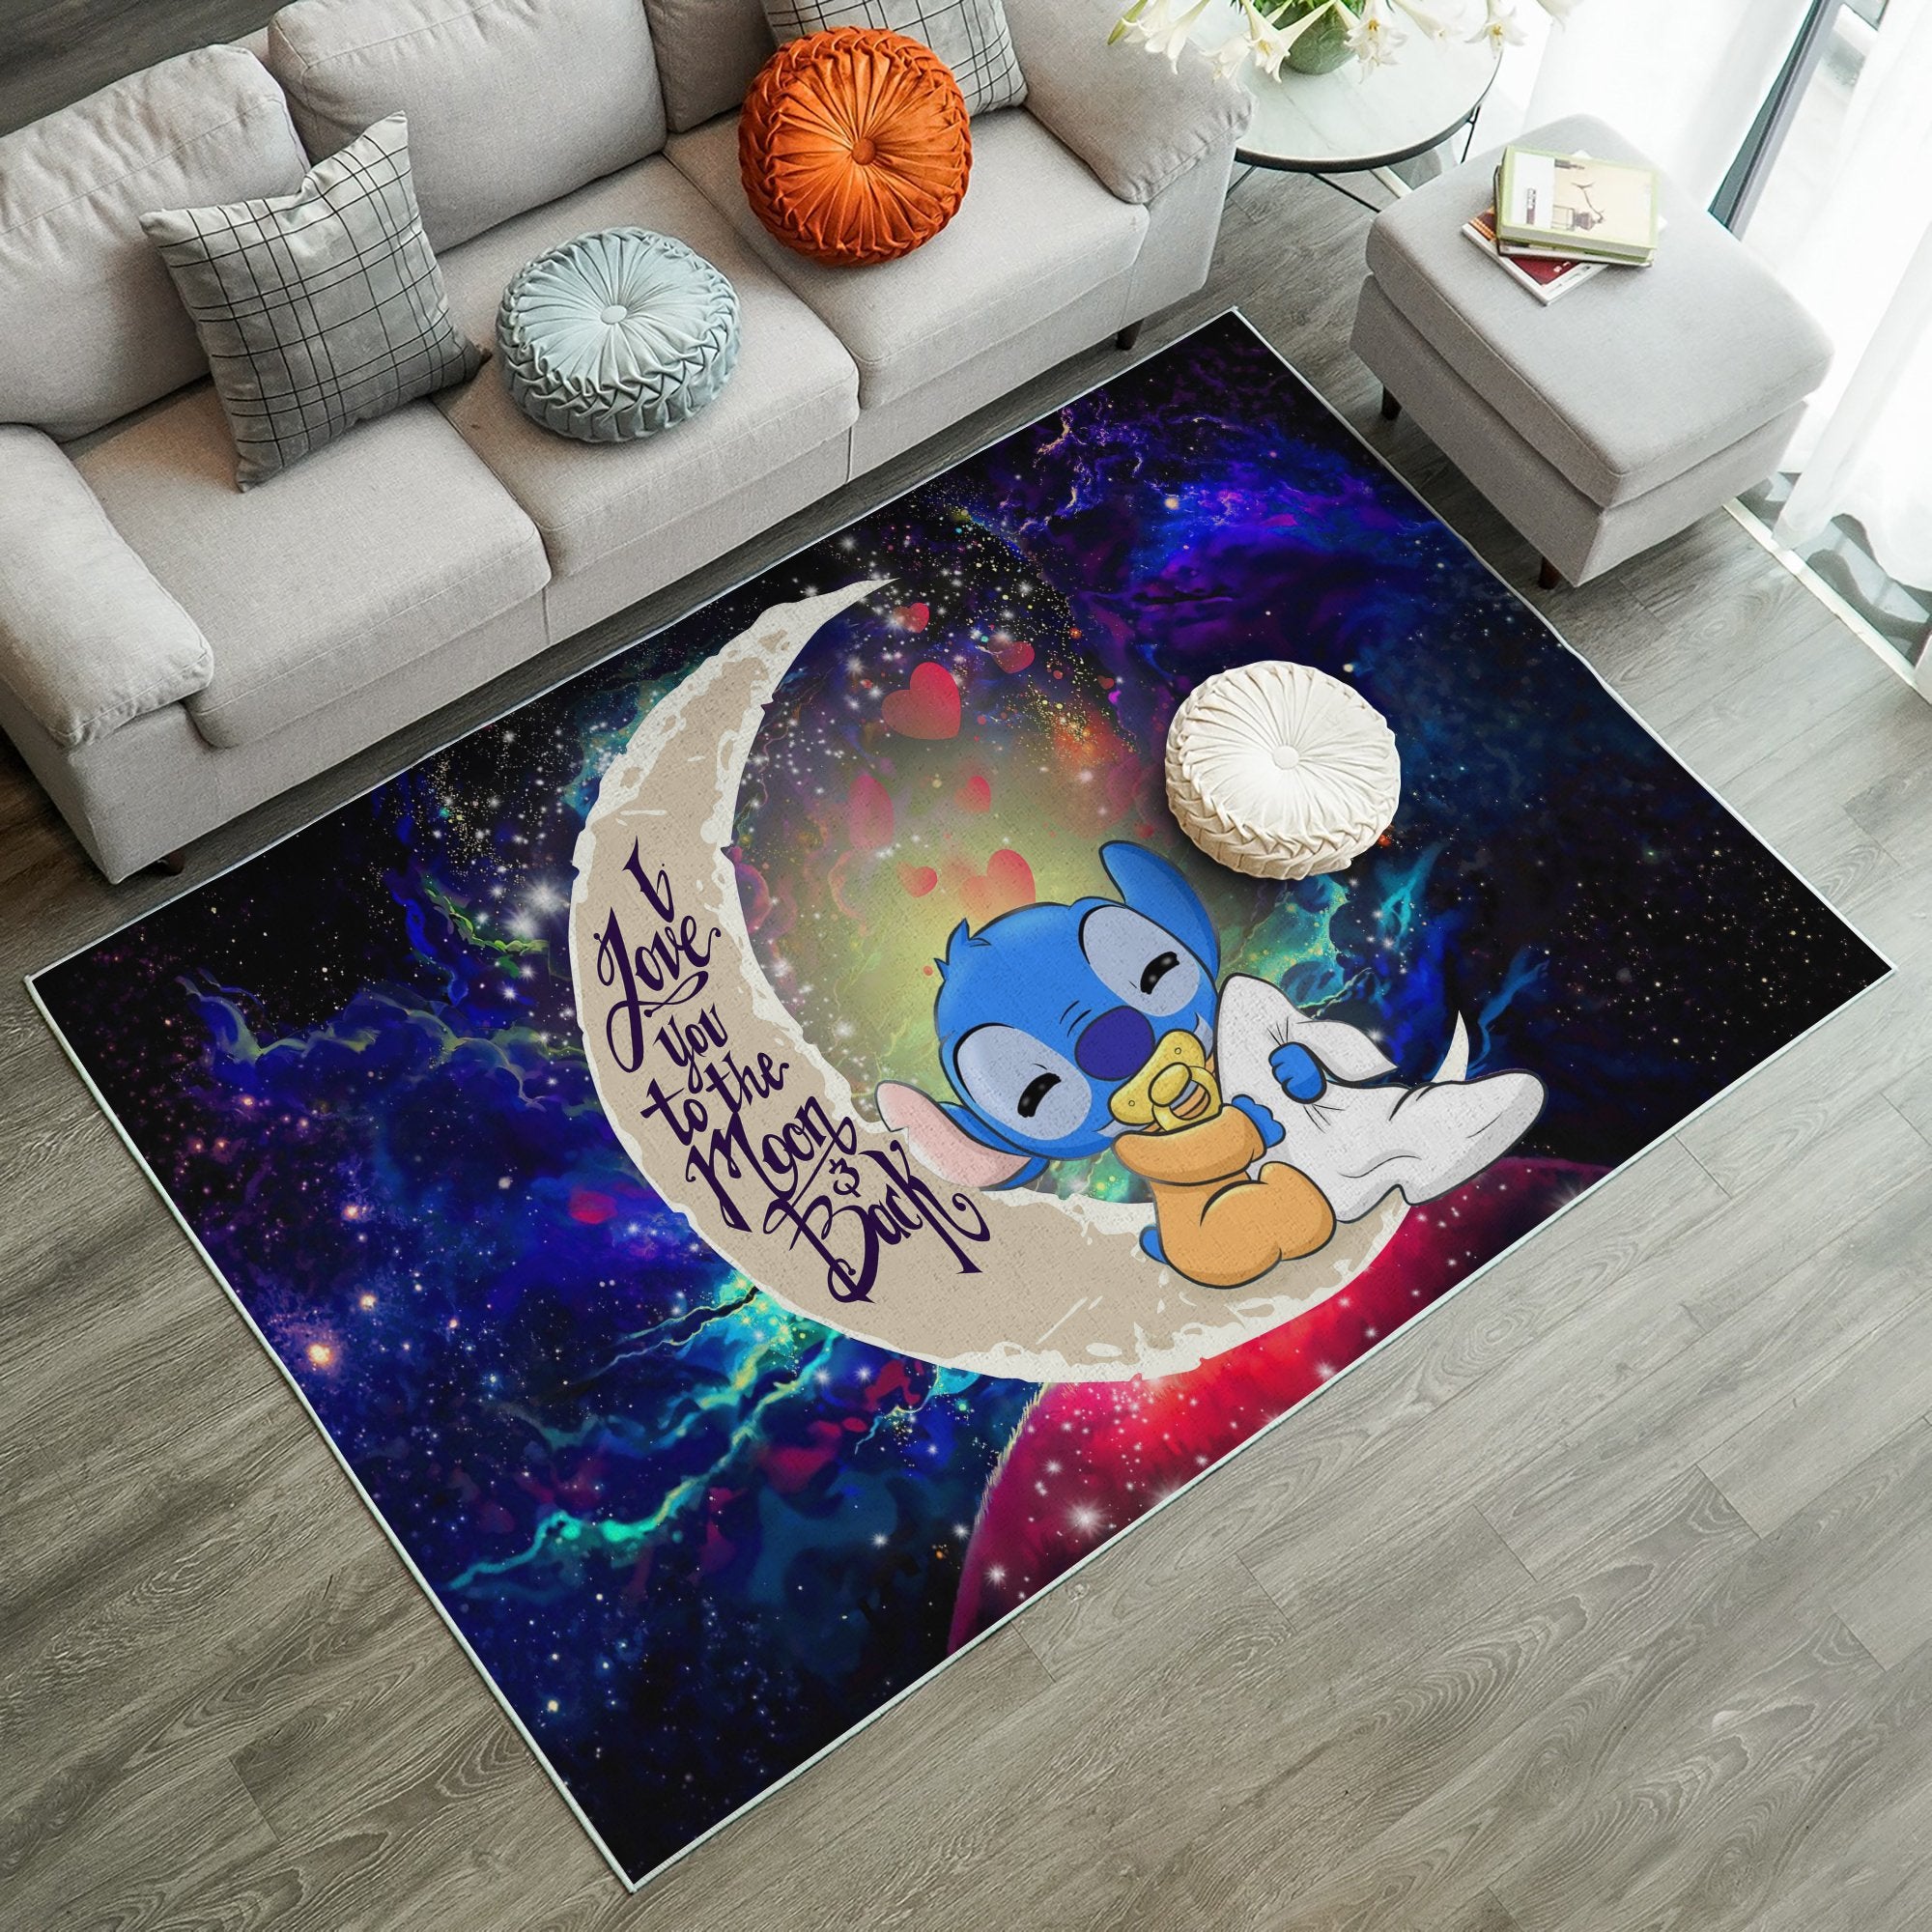 Cute Baby Stitch Sleep Love You To The Moon Galaxy Carpet Rug Home Room Decor Nearkii